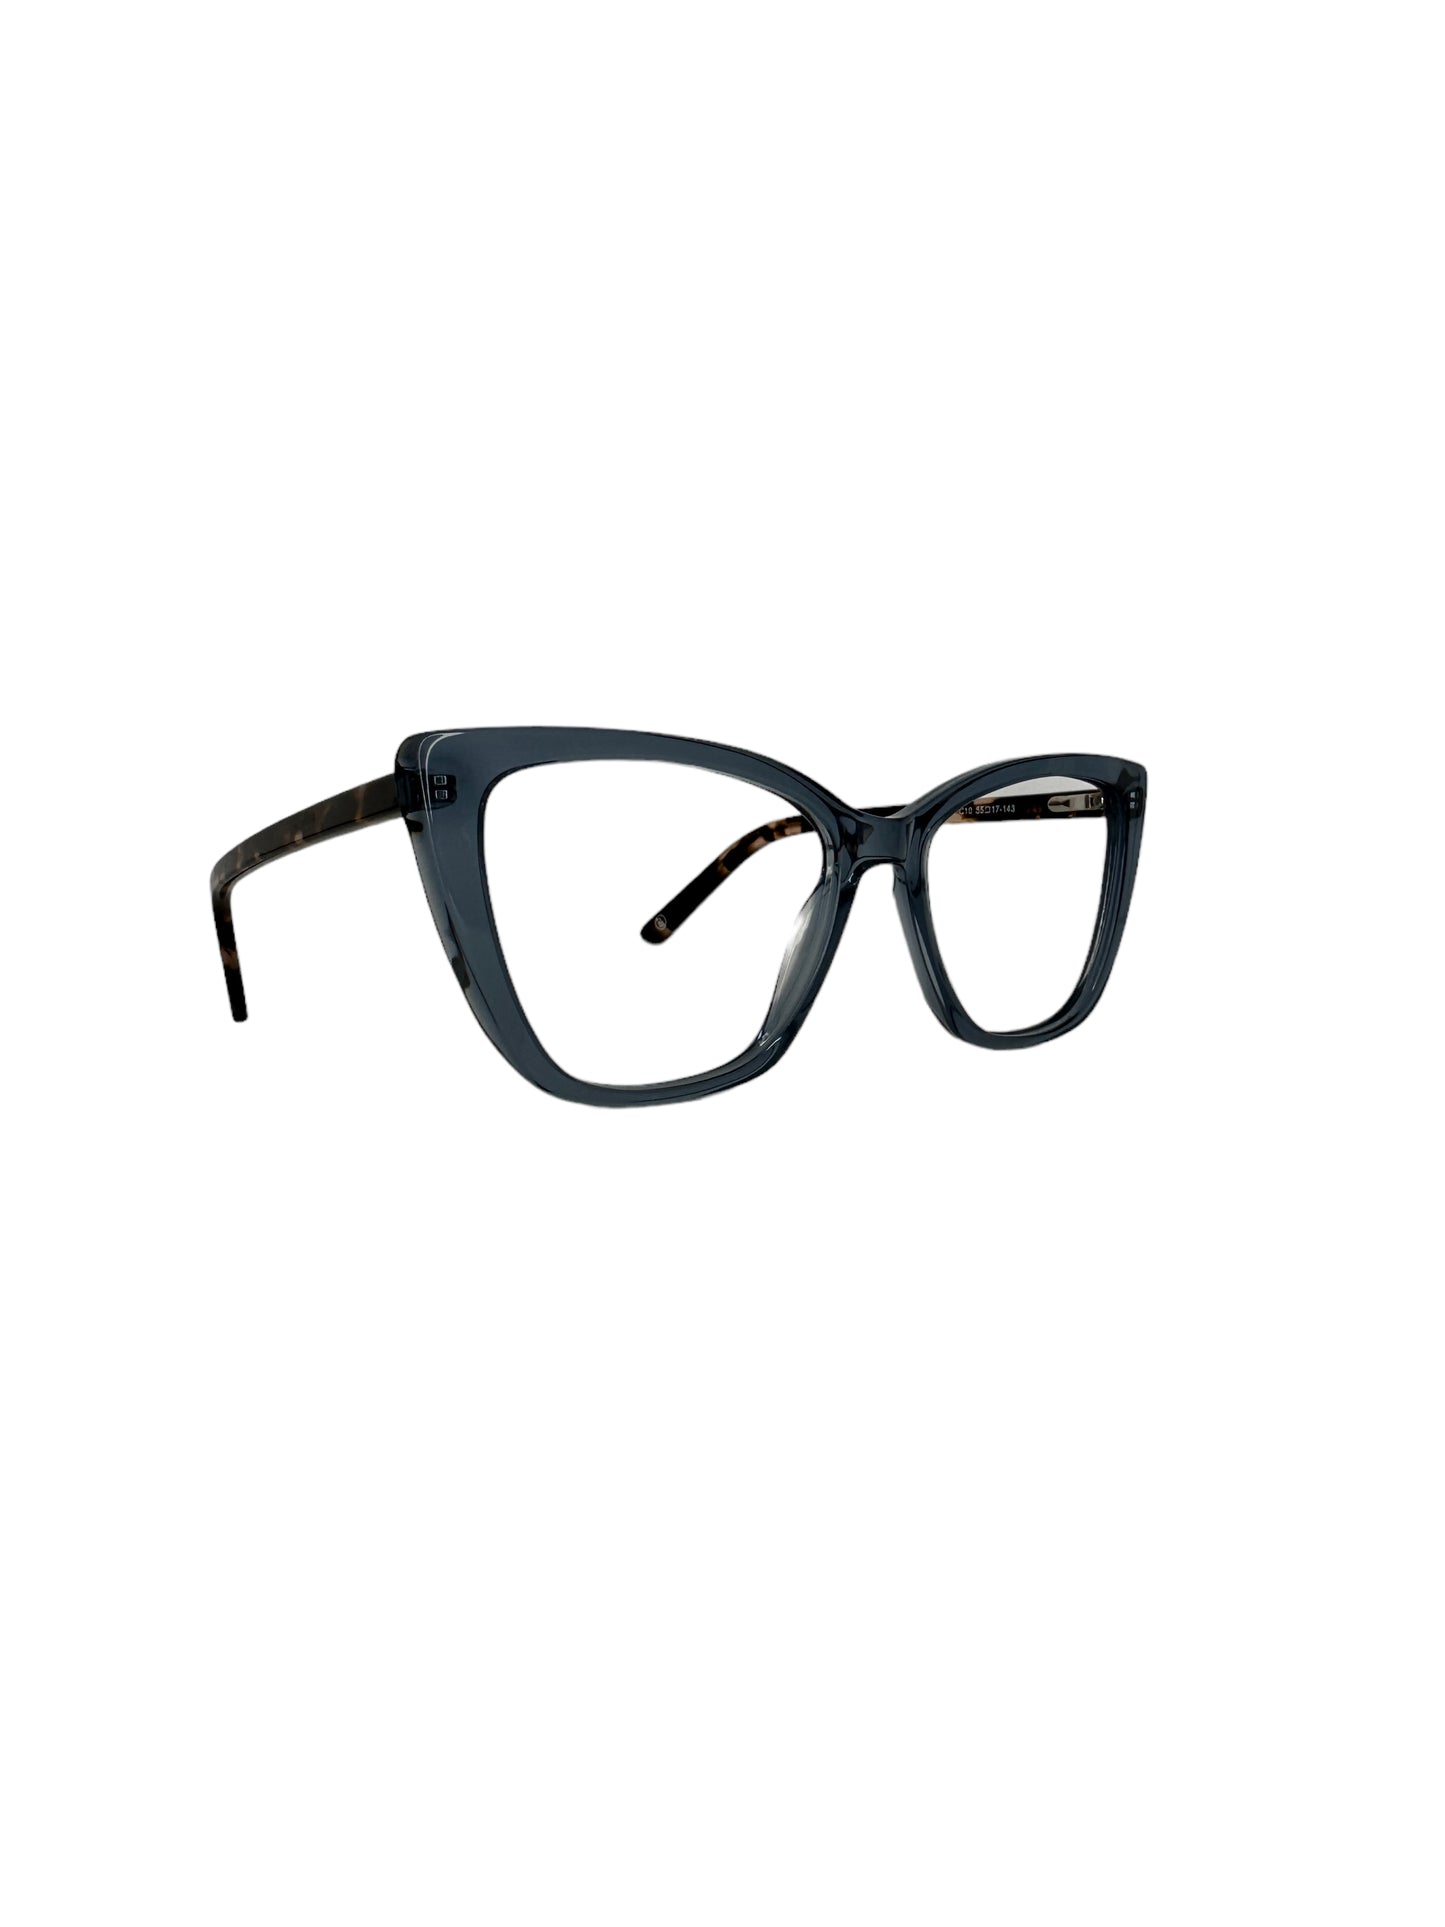 Óculos Feminino Acetado Azul Transparente Haste Mesclado SULQ3040  C10  55